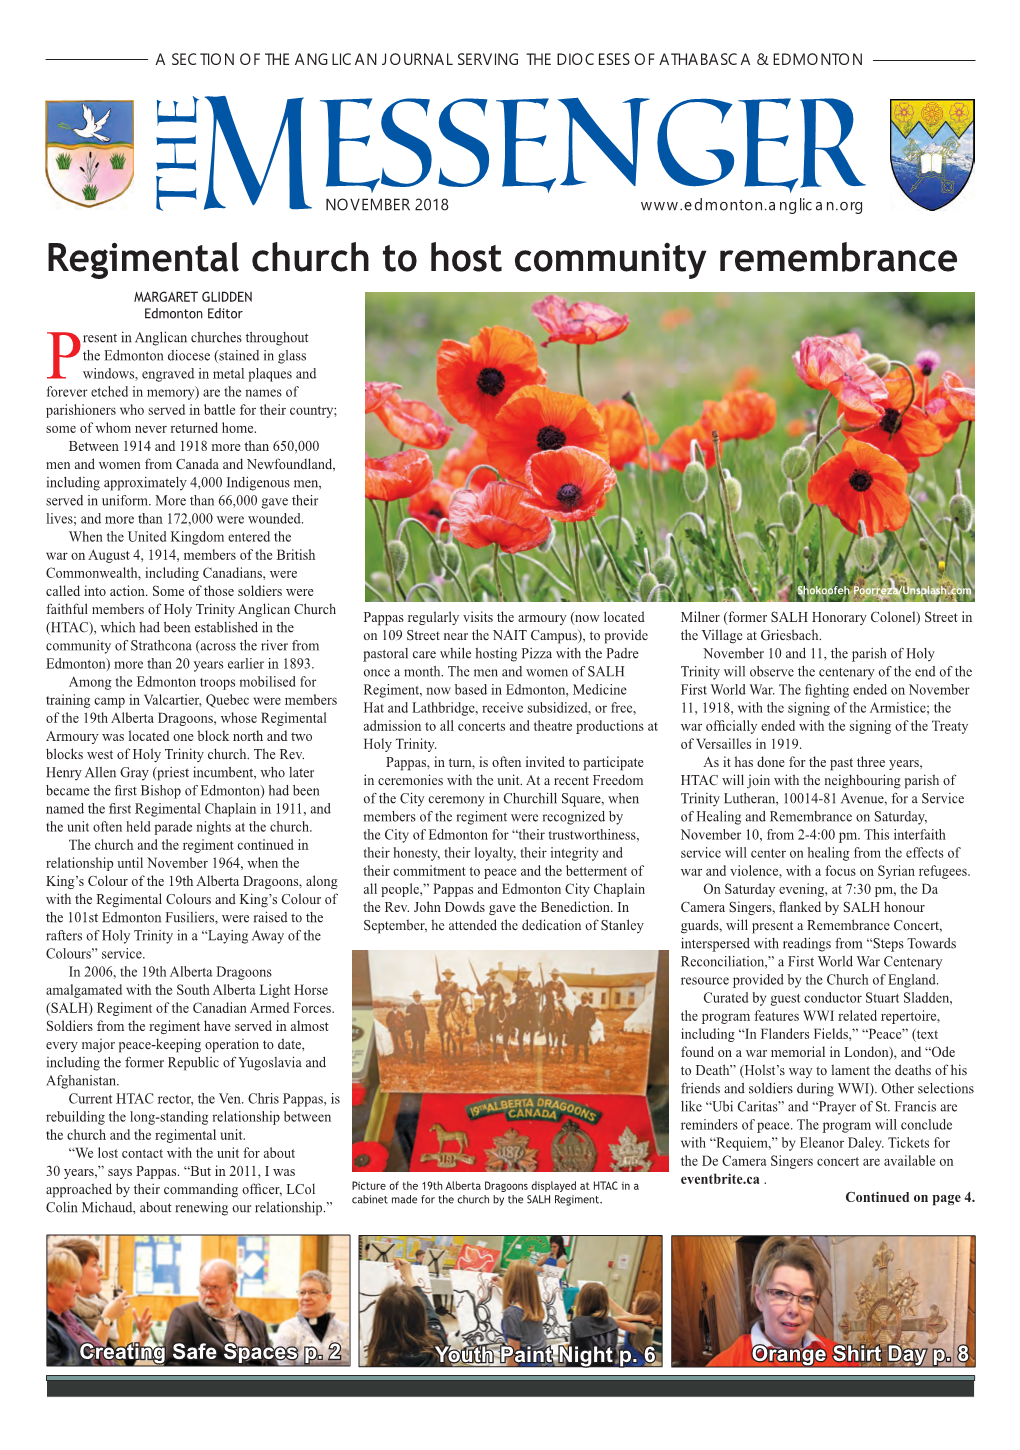 Regimental Church to Host Community Remembrance